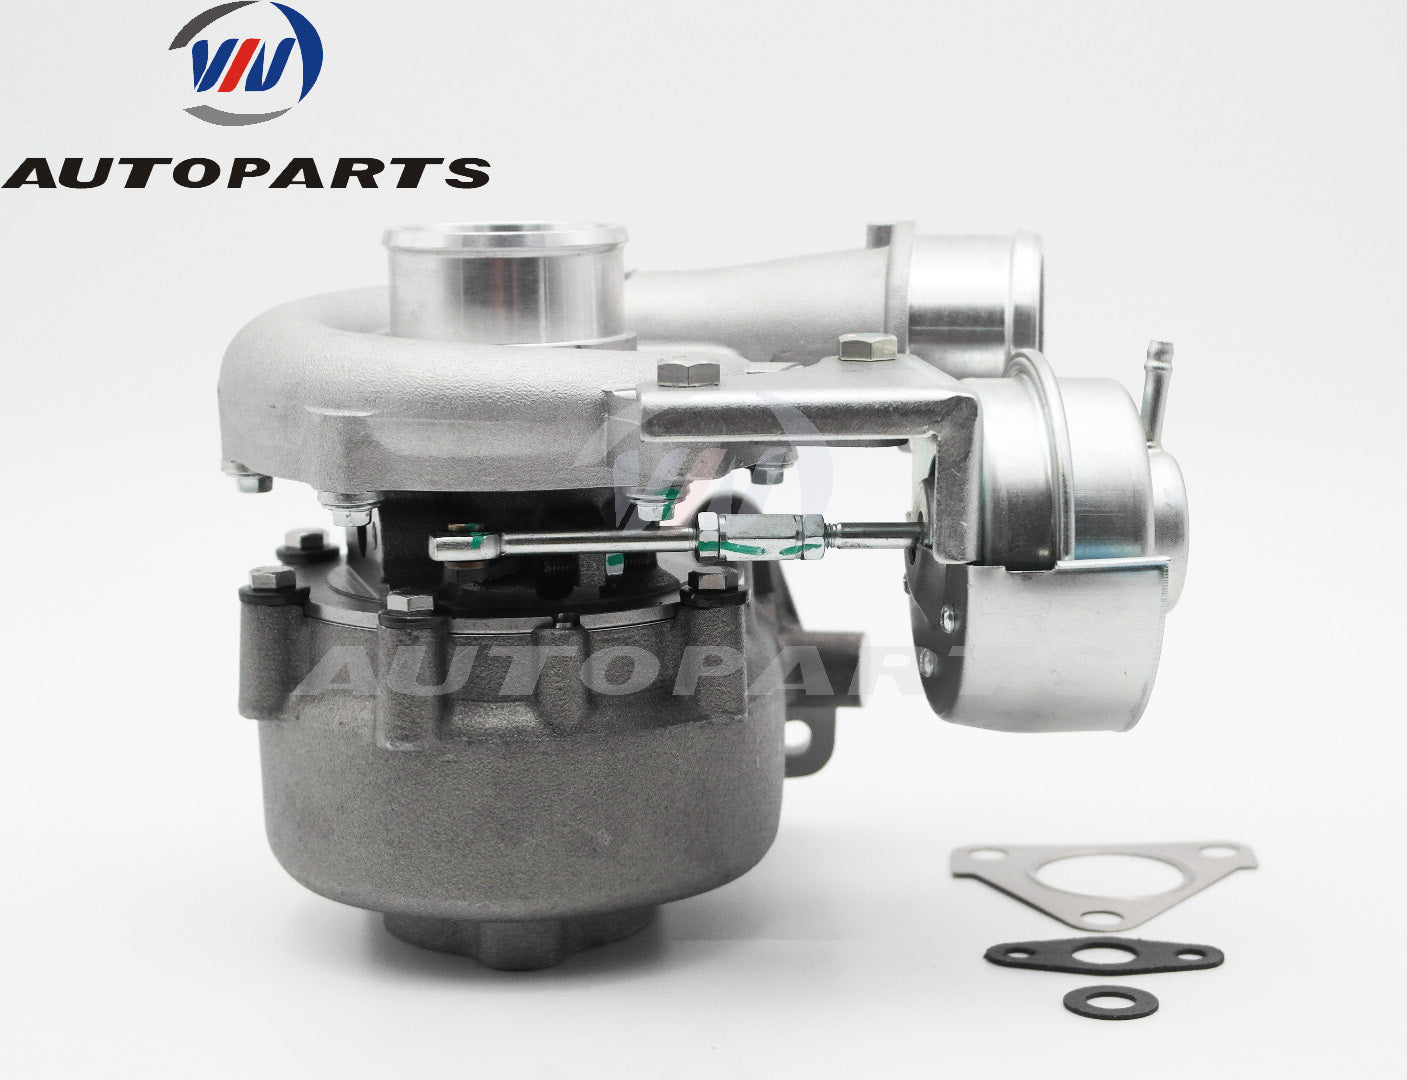 VIV AUTOPARTS Turbocharger 49135-07300 for Hyundai Santa Fe 2.2L Diesel Engine ¡­